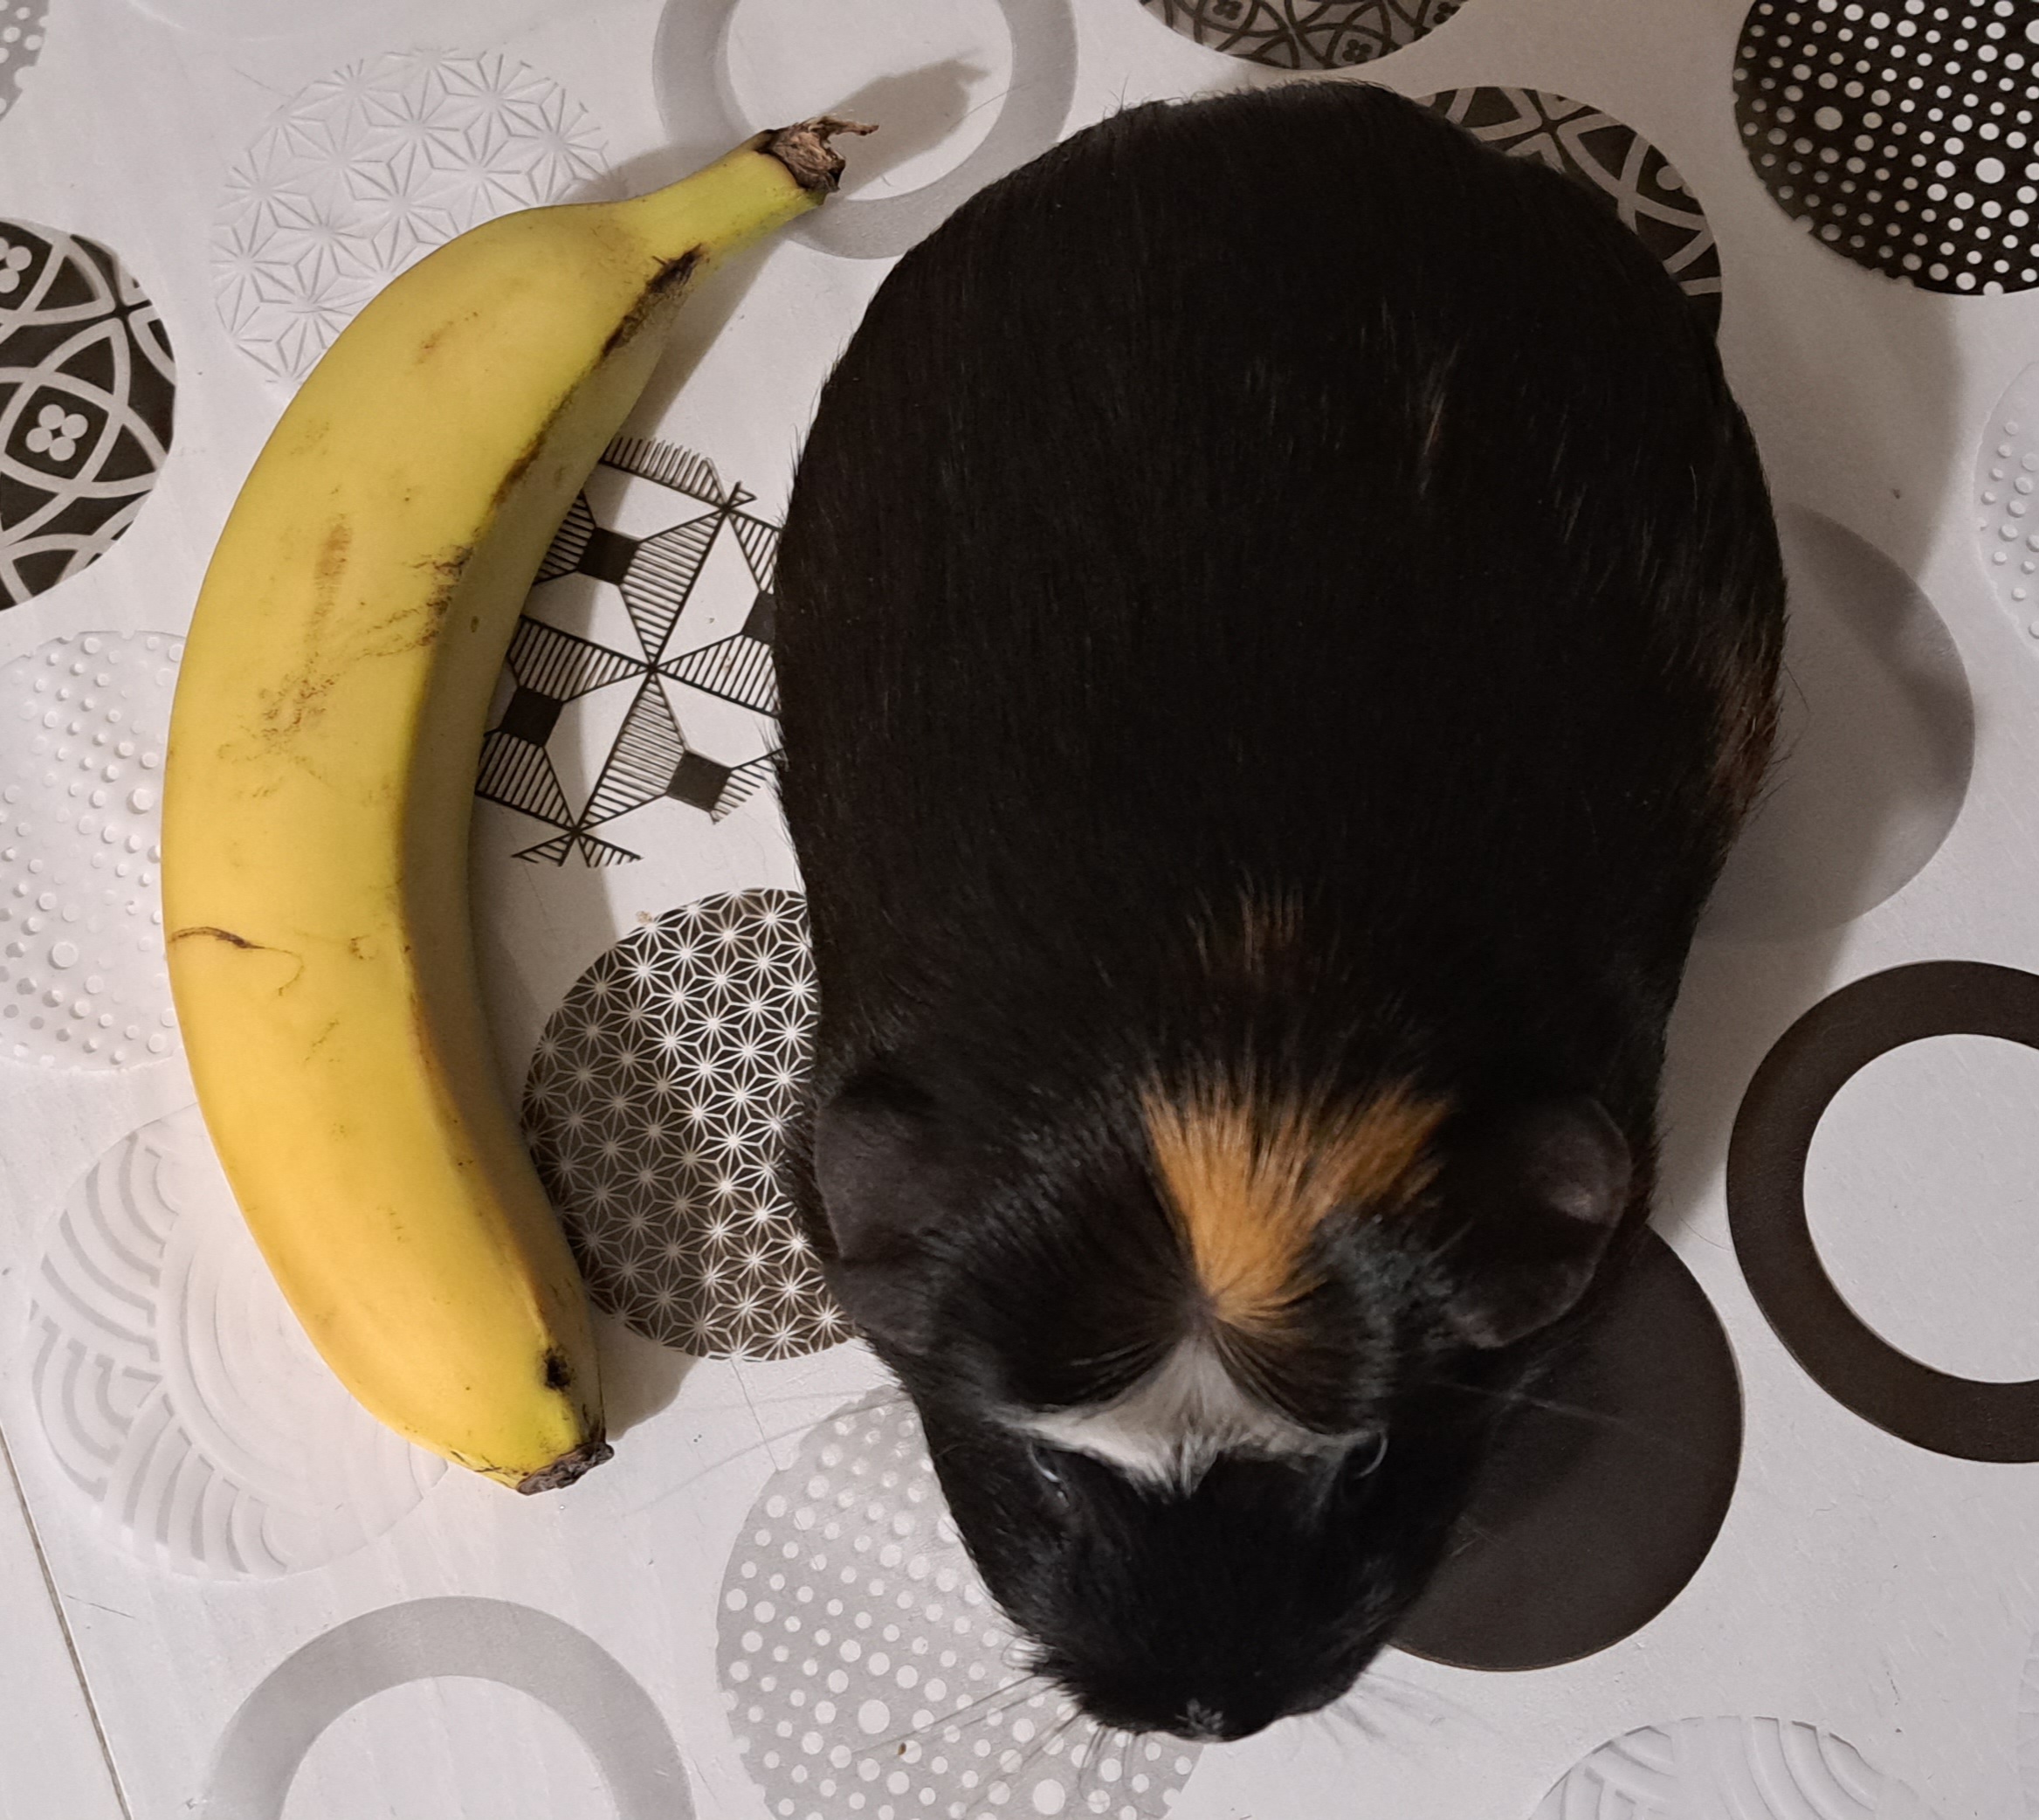 banana-for-scale.jpg